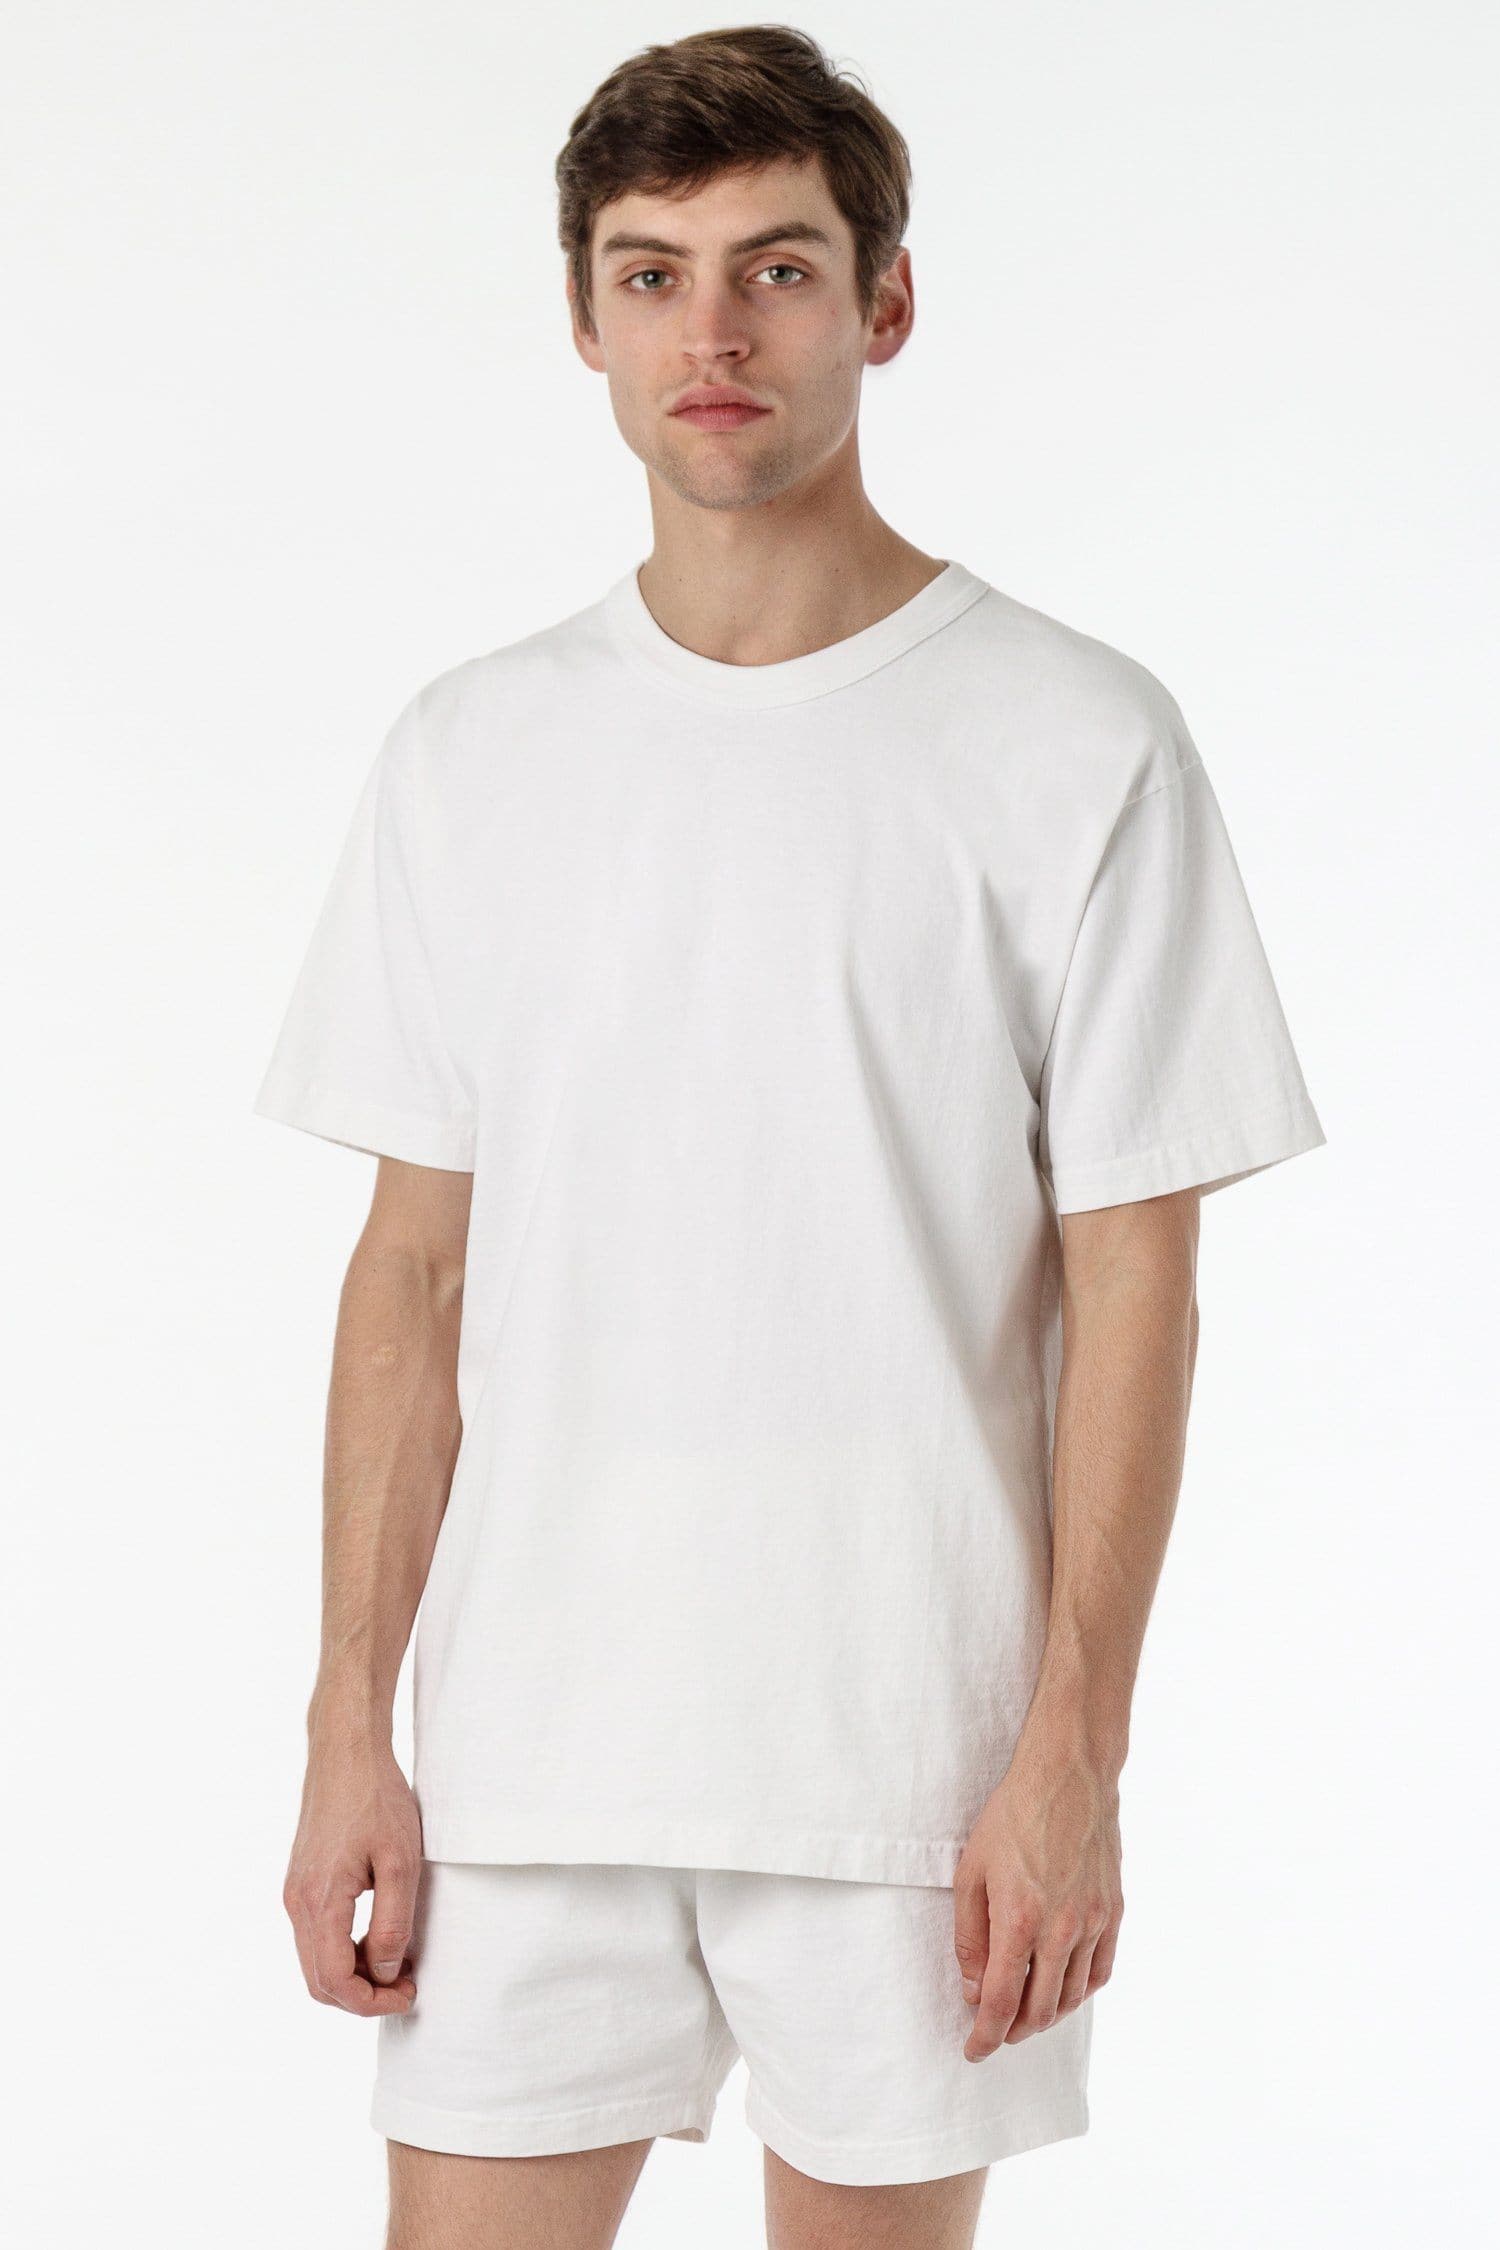 1406GD - Long Sleeve Garment Dye Mockneck T-Shirt – Los Angeles